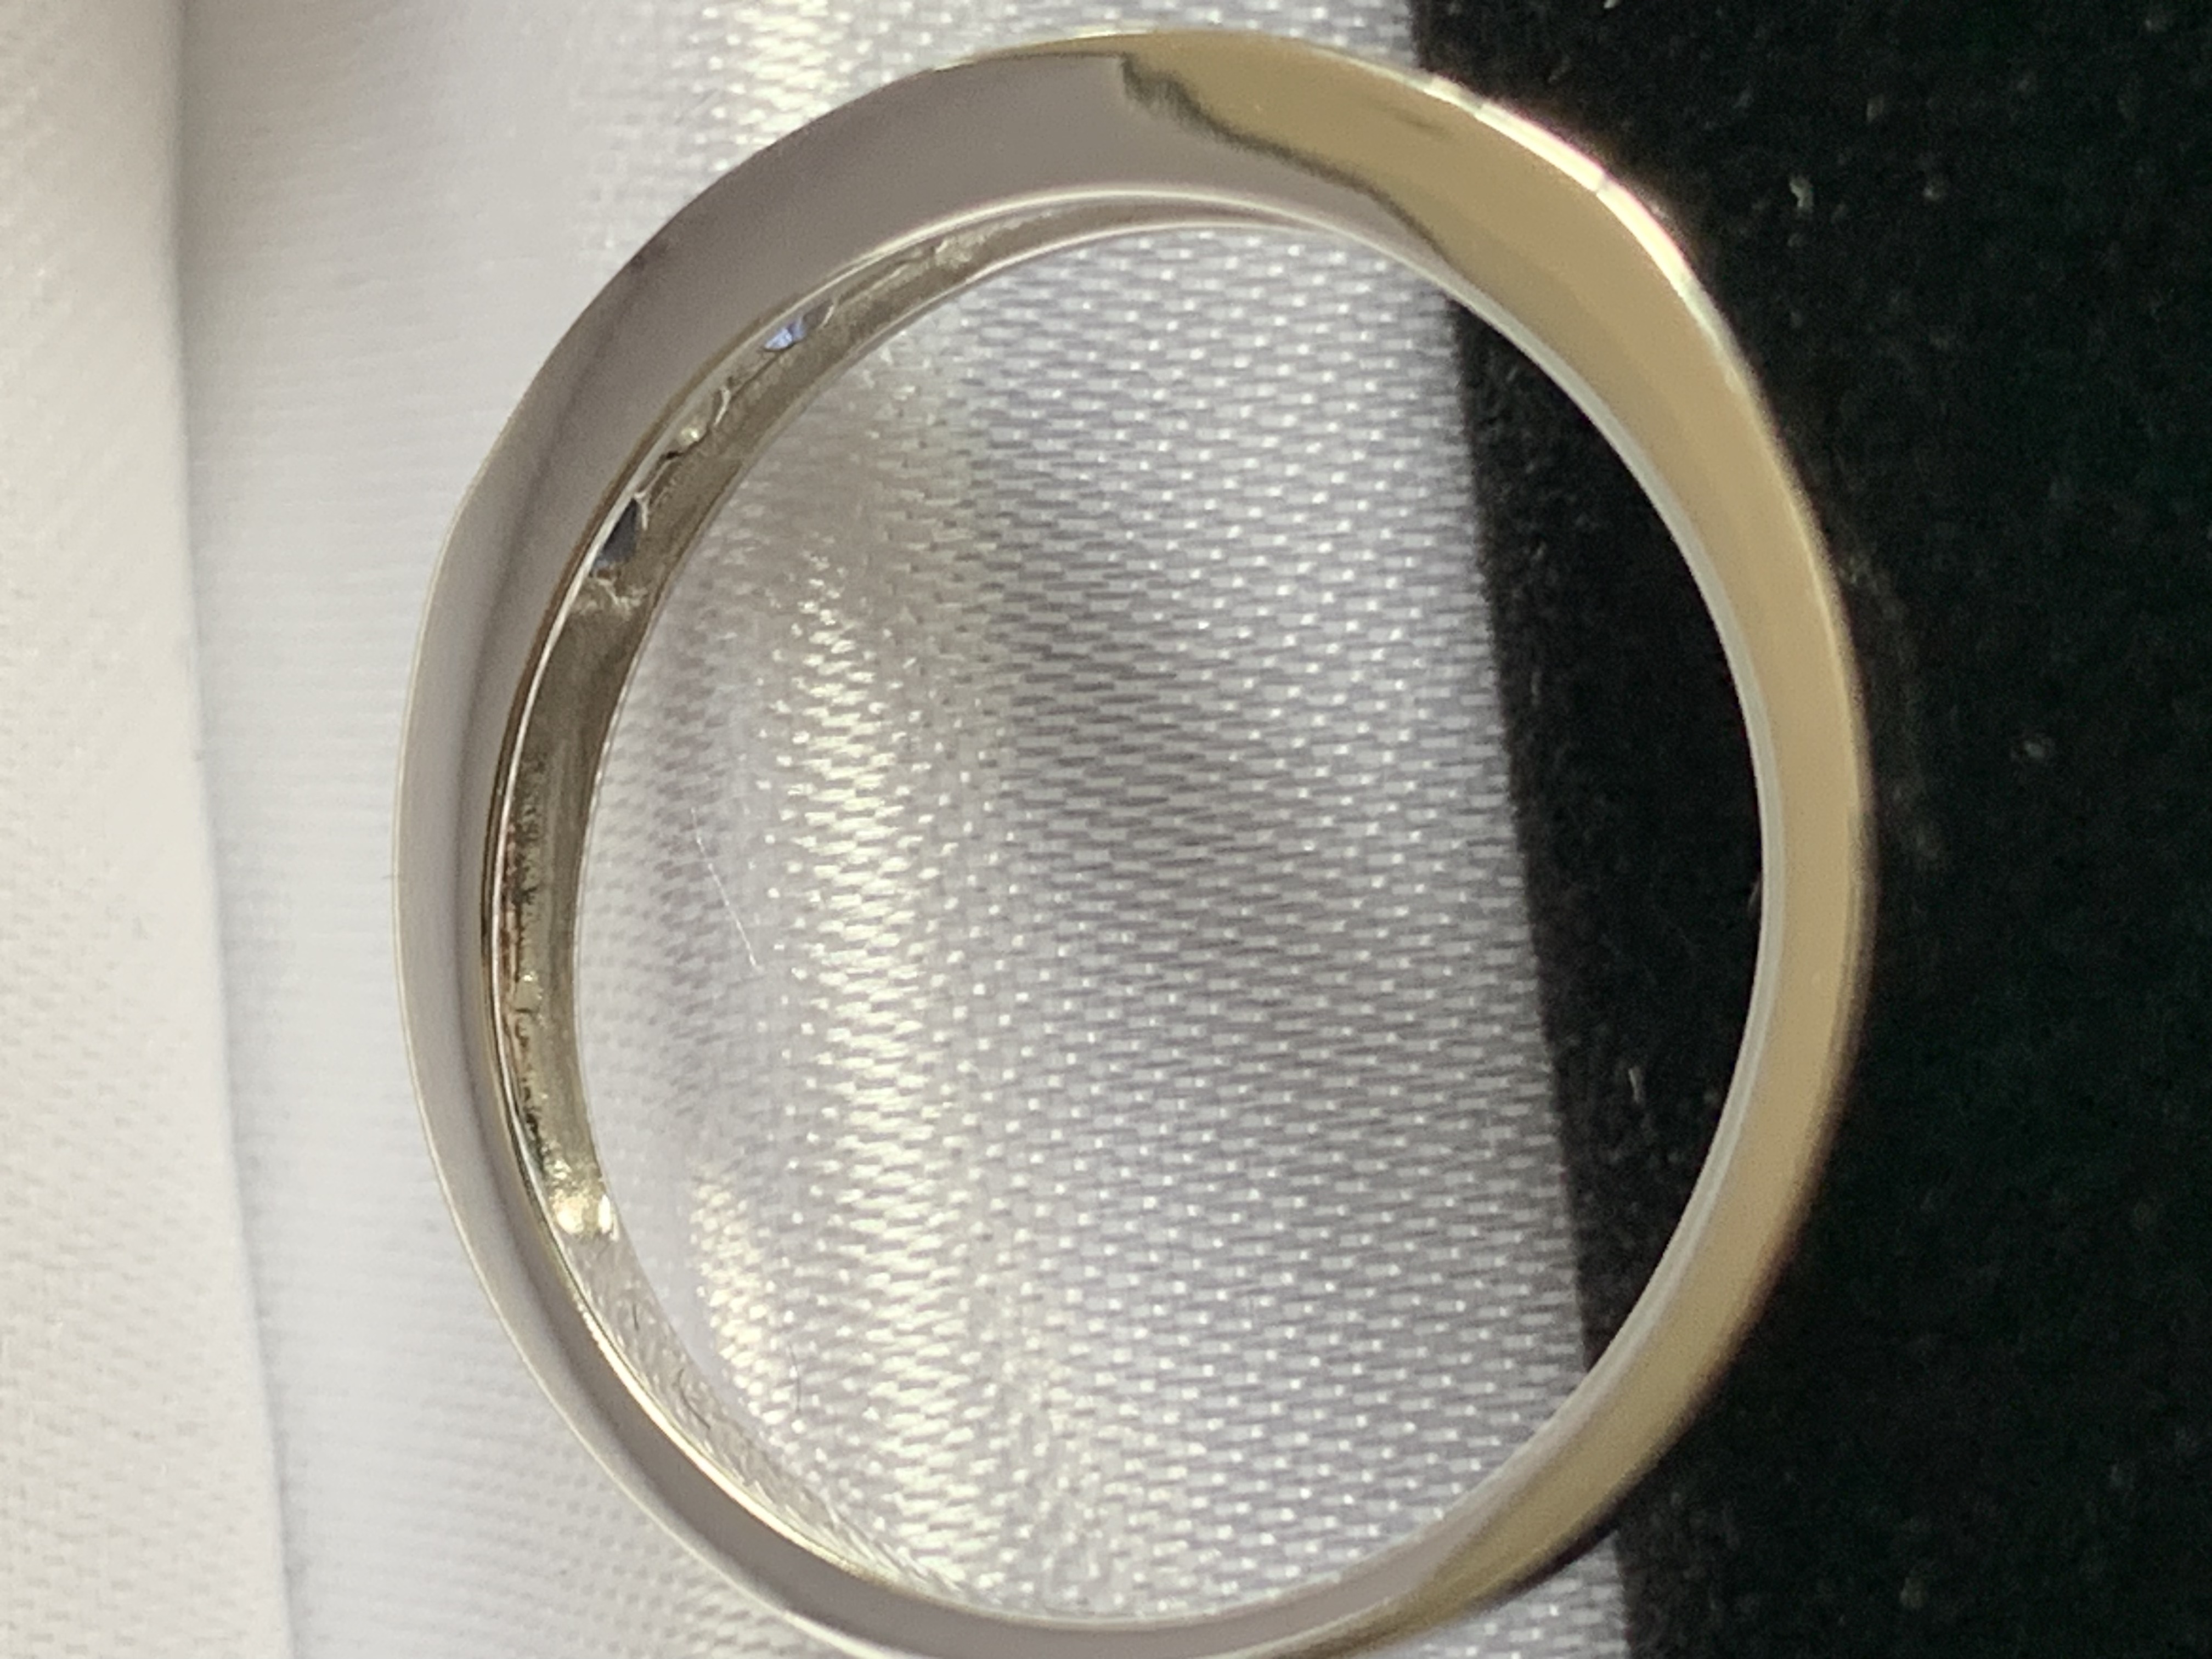 9ct White Gold Channel Set Semi Eternity Diamond & Sapphire Ring 0.12 - Image 6 of 10